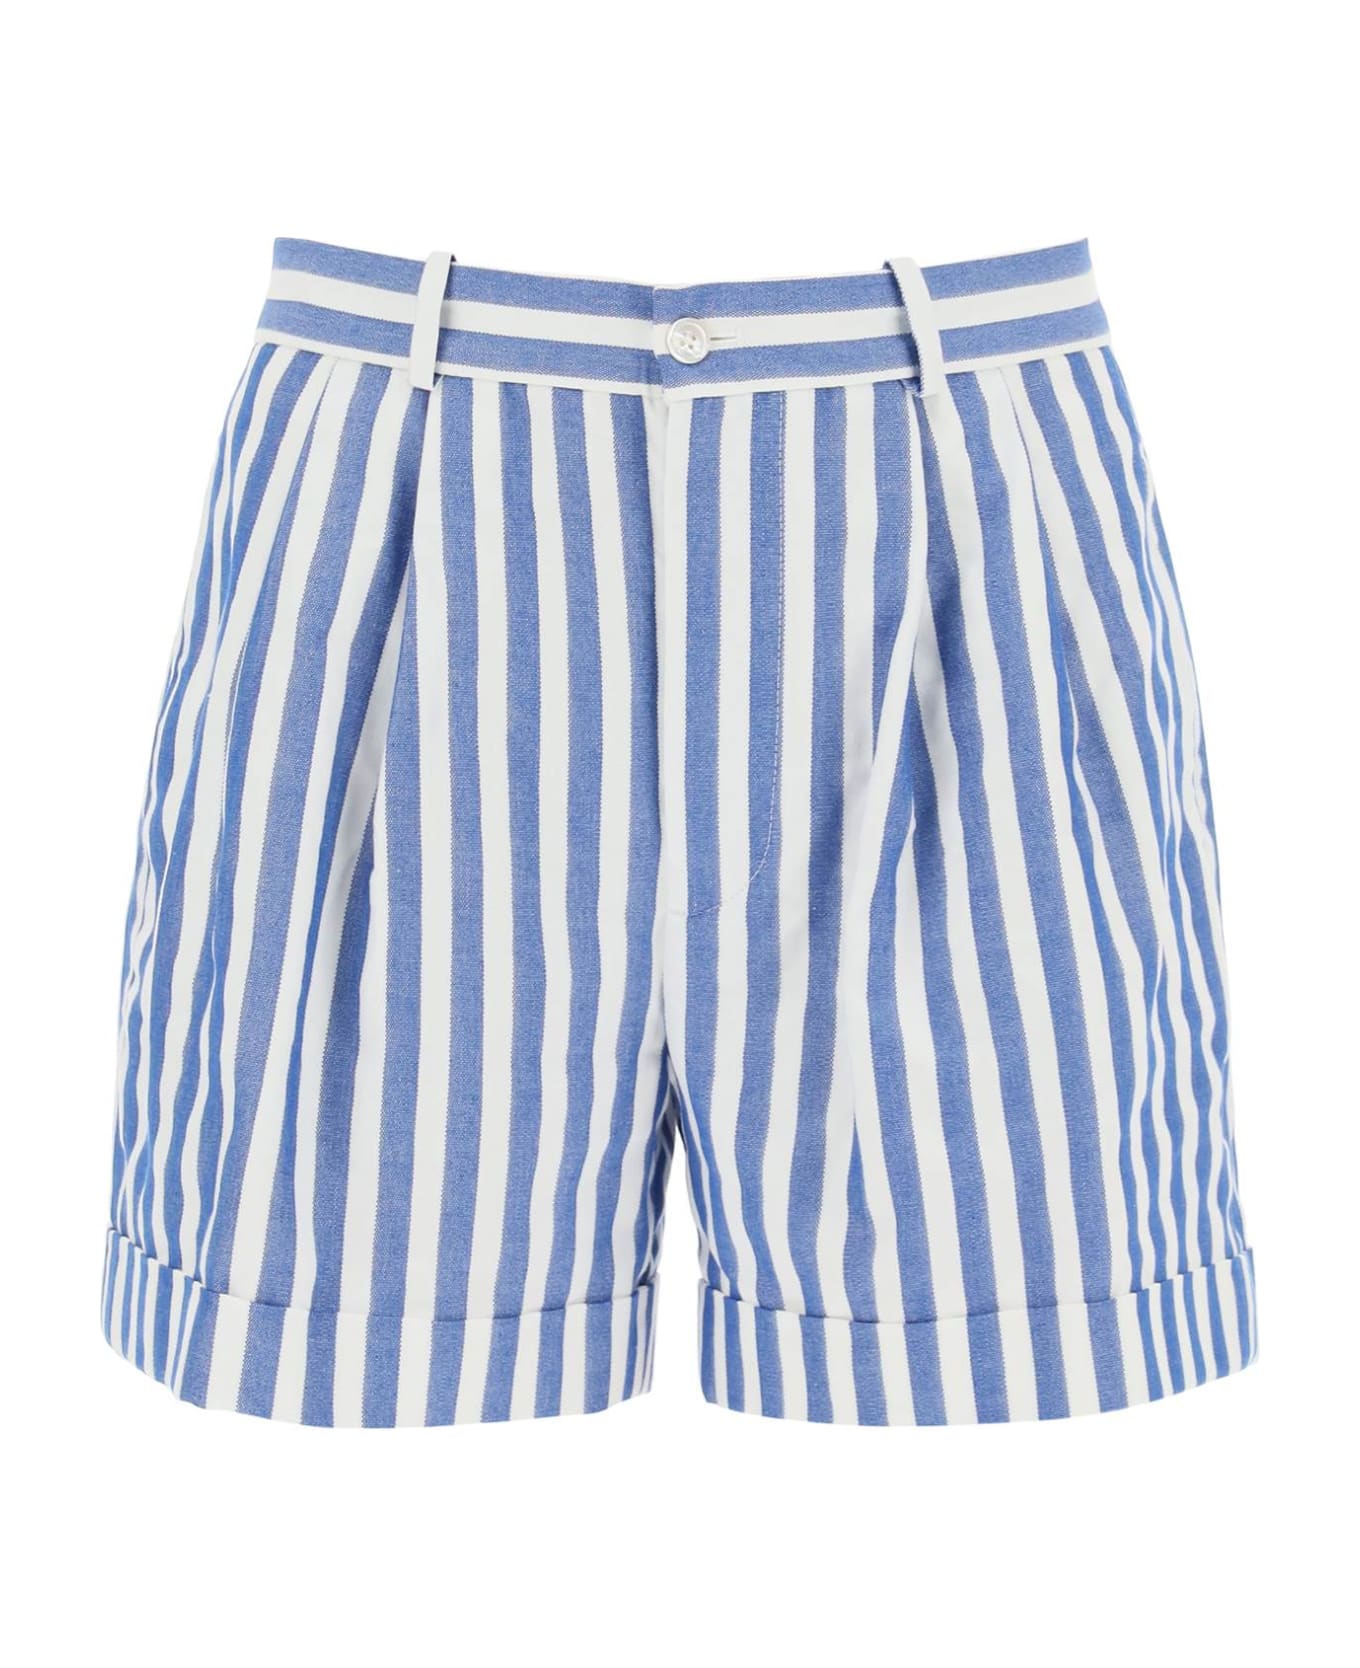 Polo Ralph Lauren Striped Shorts - BLUE WHITE AWNING STRIPE (White)